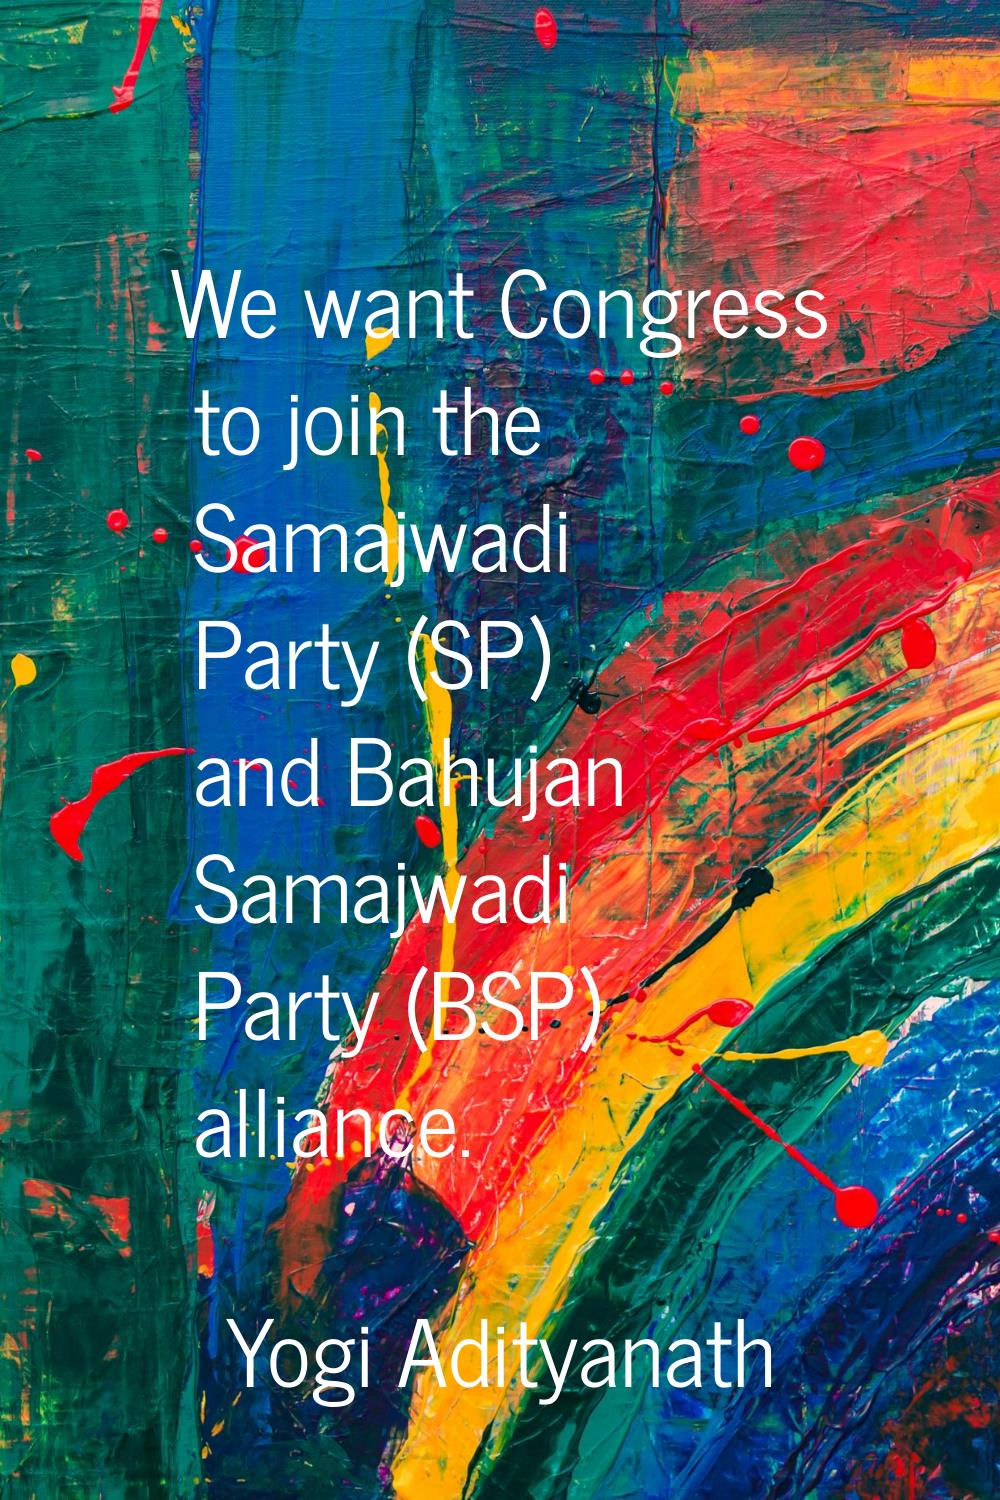 We want Congress to join the Samajwadi Party (SP) and Bahujan Samajwadi Party (BSP) alliance.